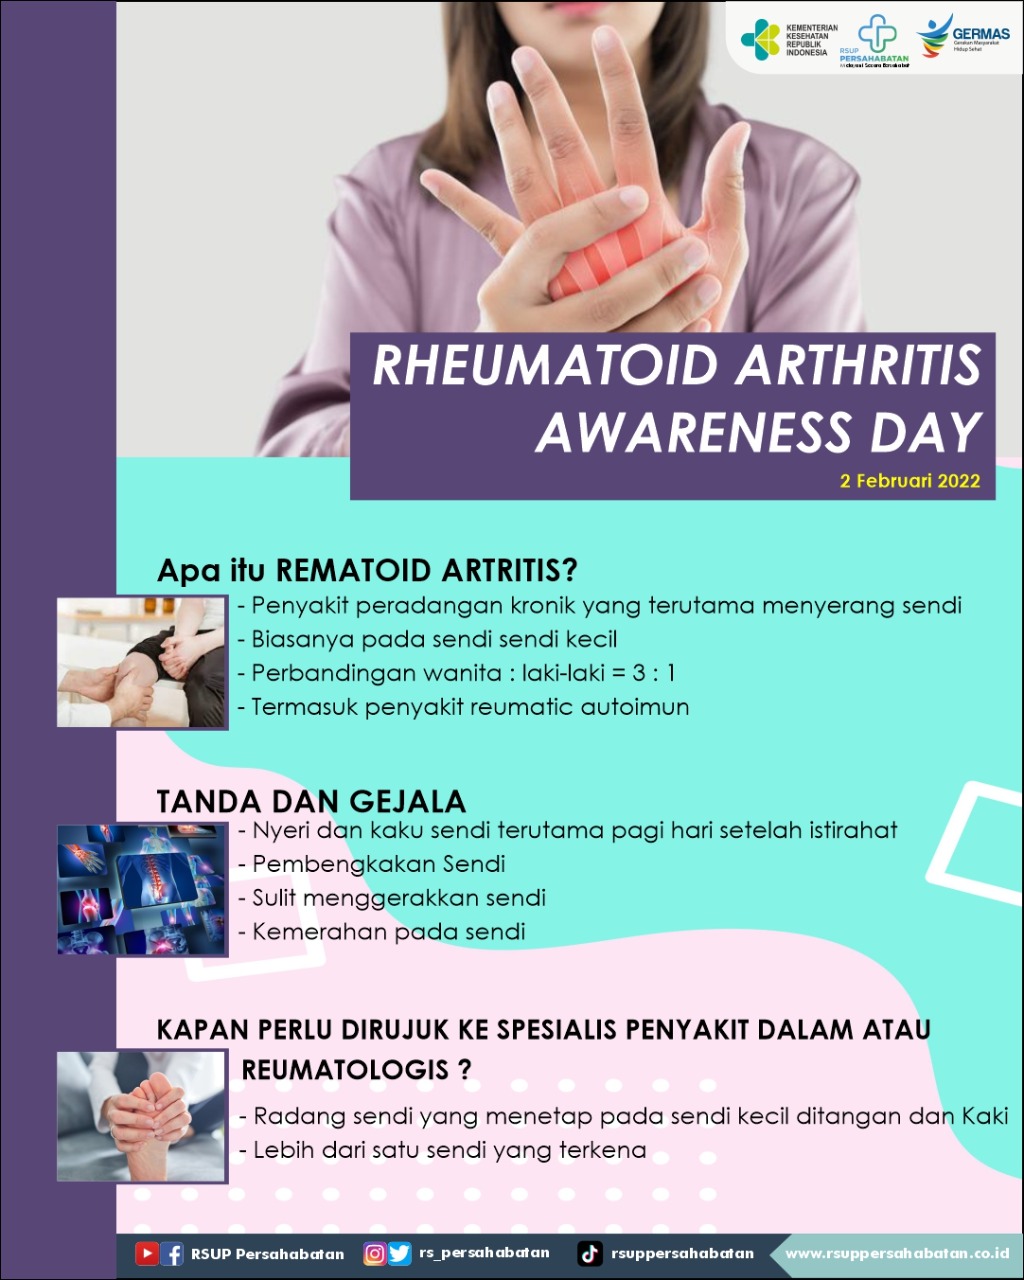 Rheumatoid Arthritis Awarness Day